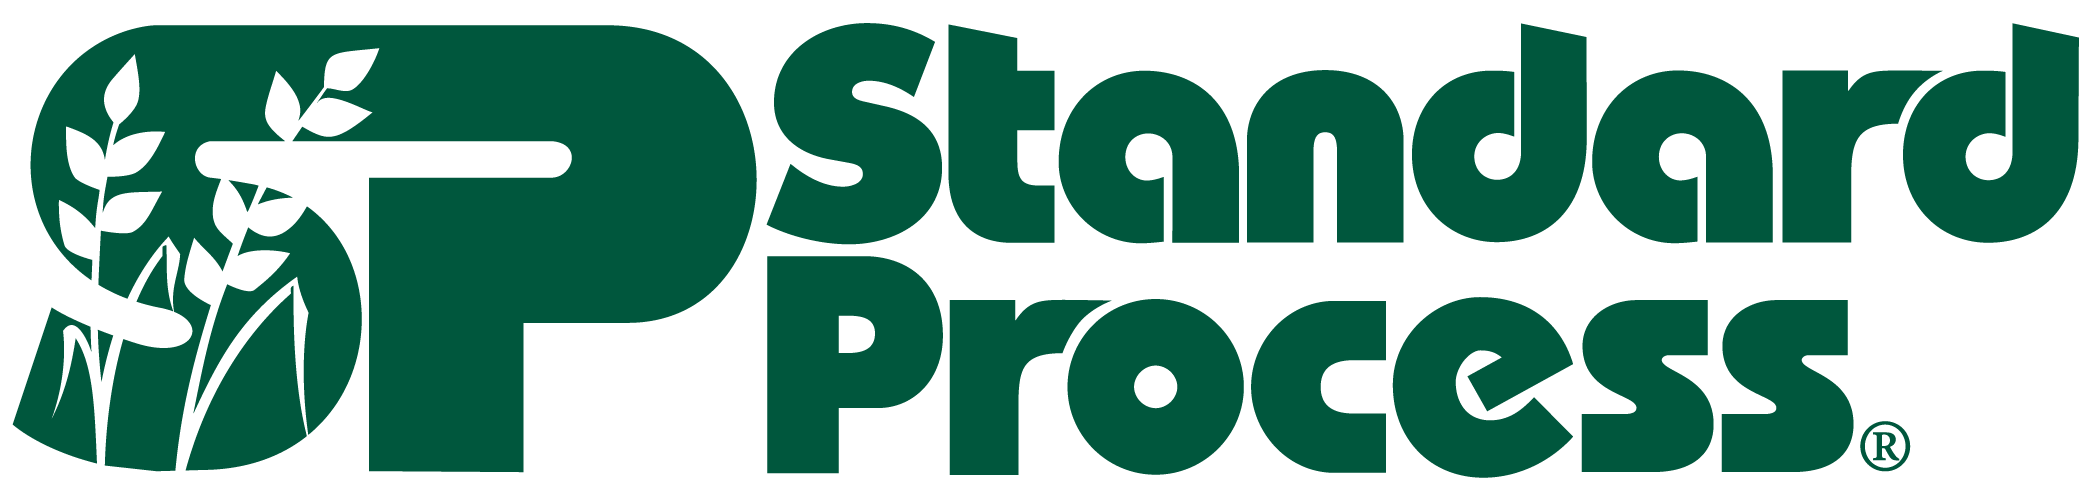 Standard Process Inc. logo